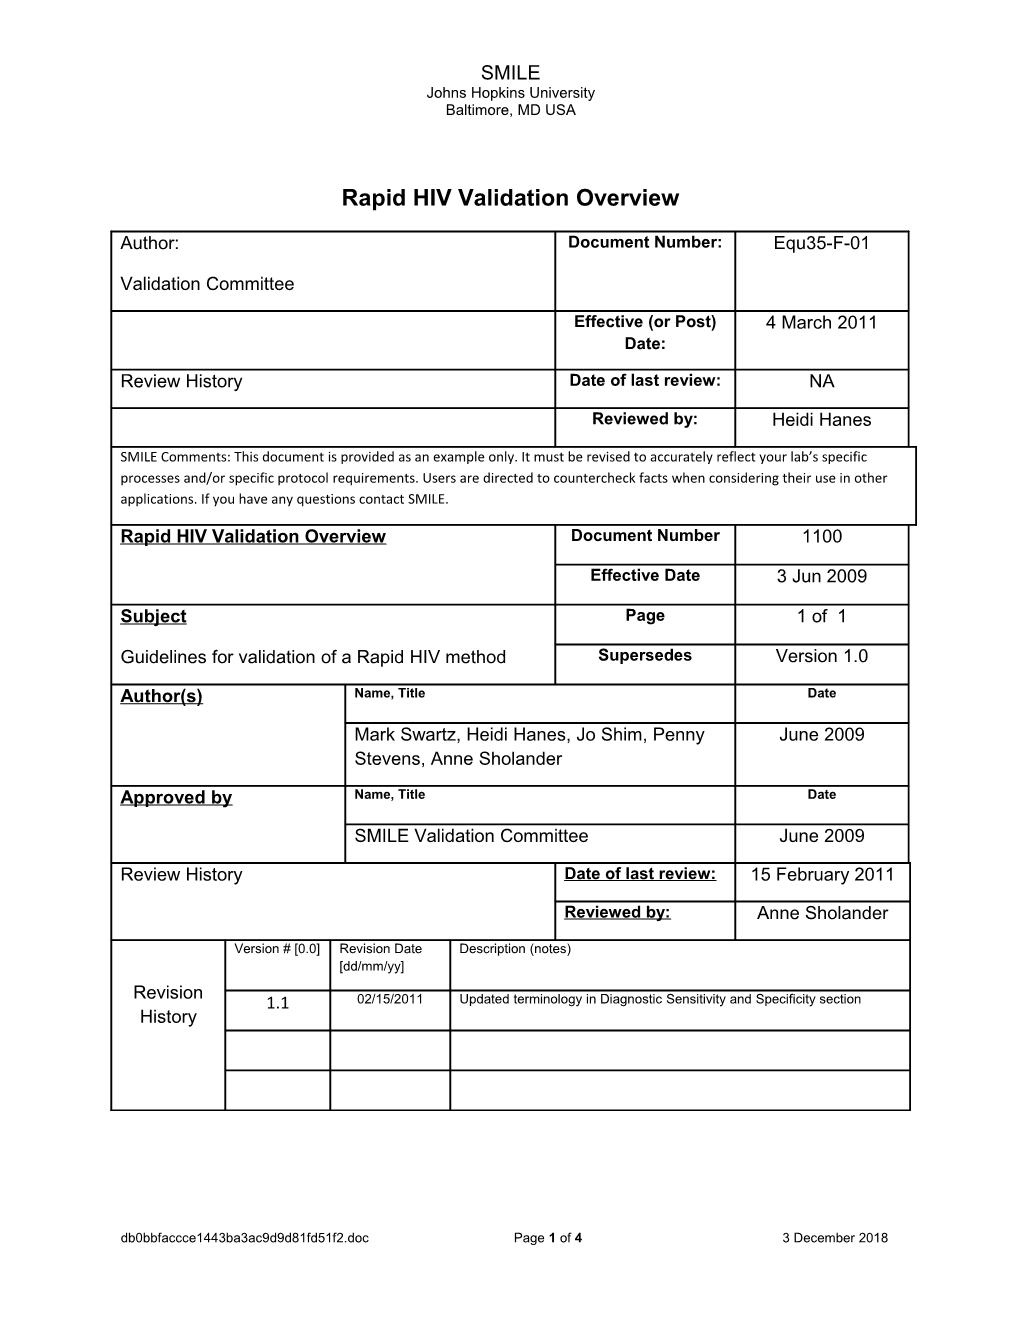 Rapid HIV Validation Overview